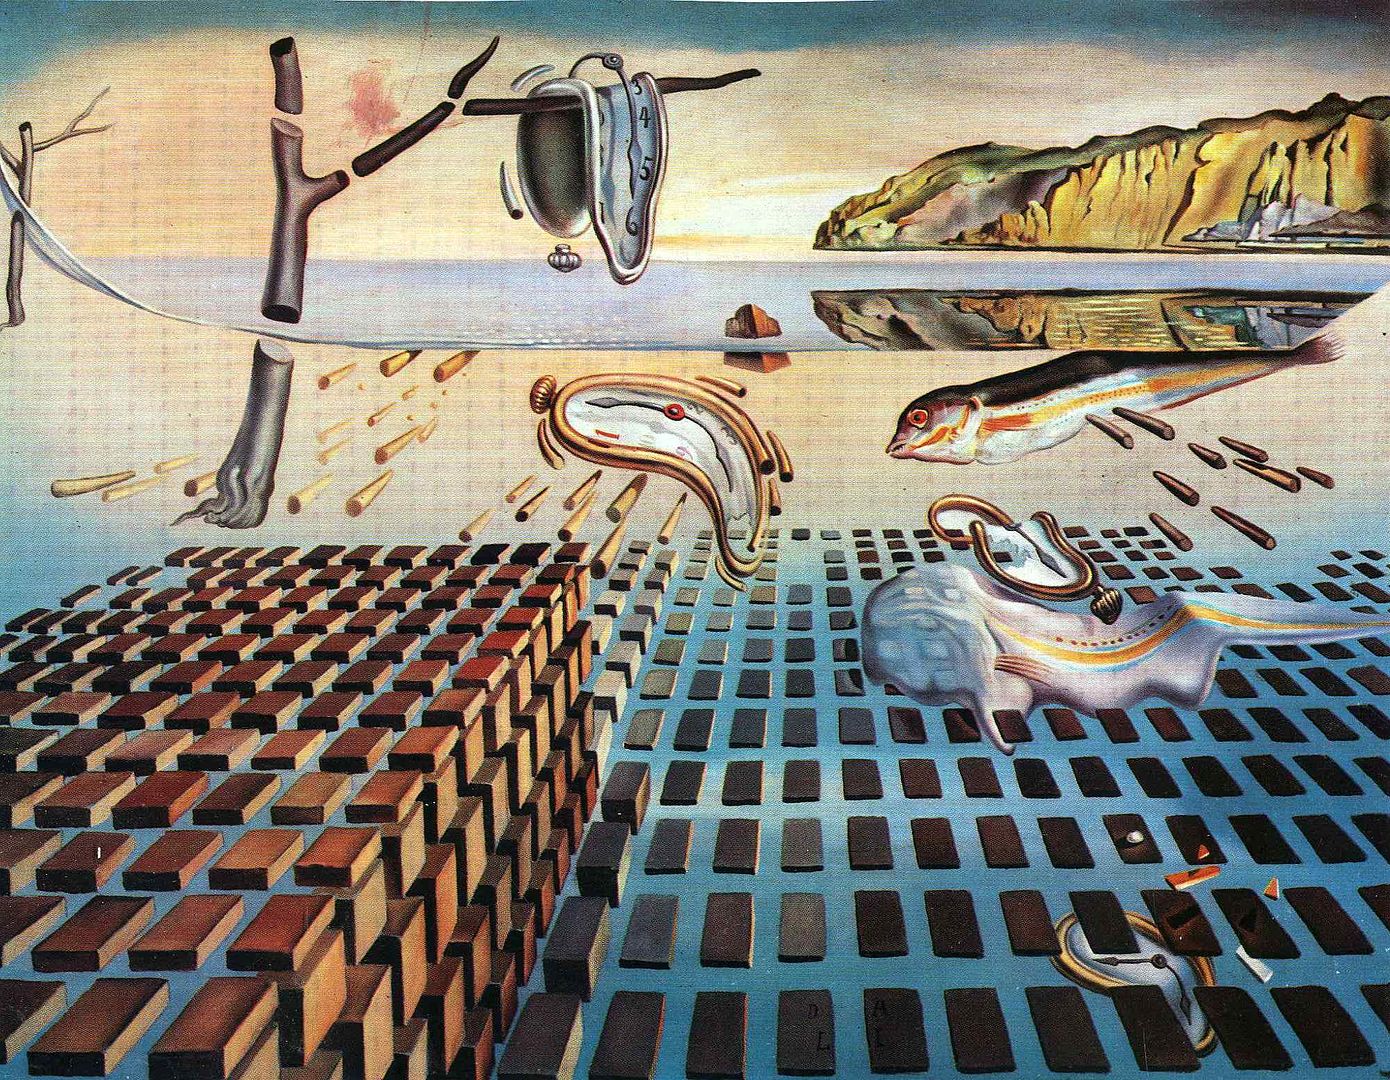 Salvador Dali disintegration memory CANVAS ART PRINT Poster 16"X 12" - Picture 1 of 1